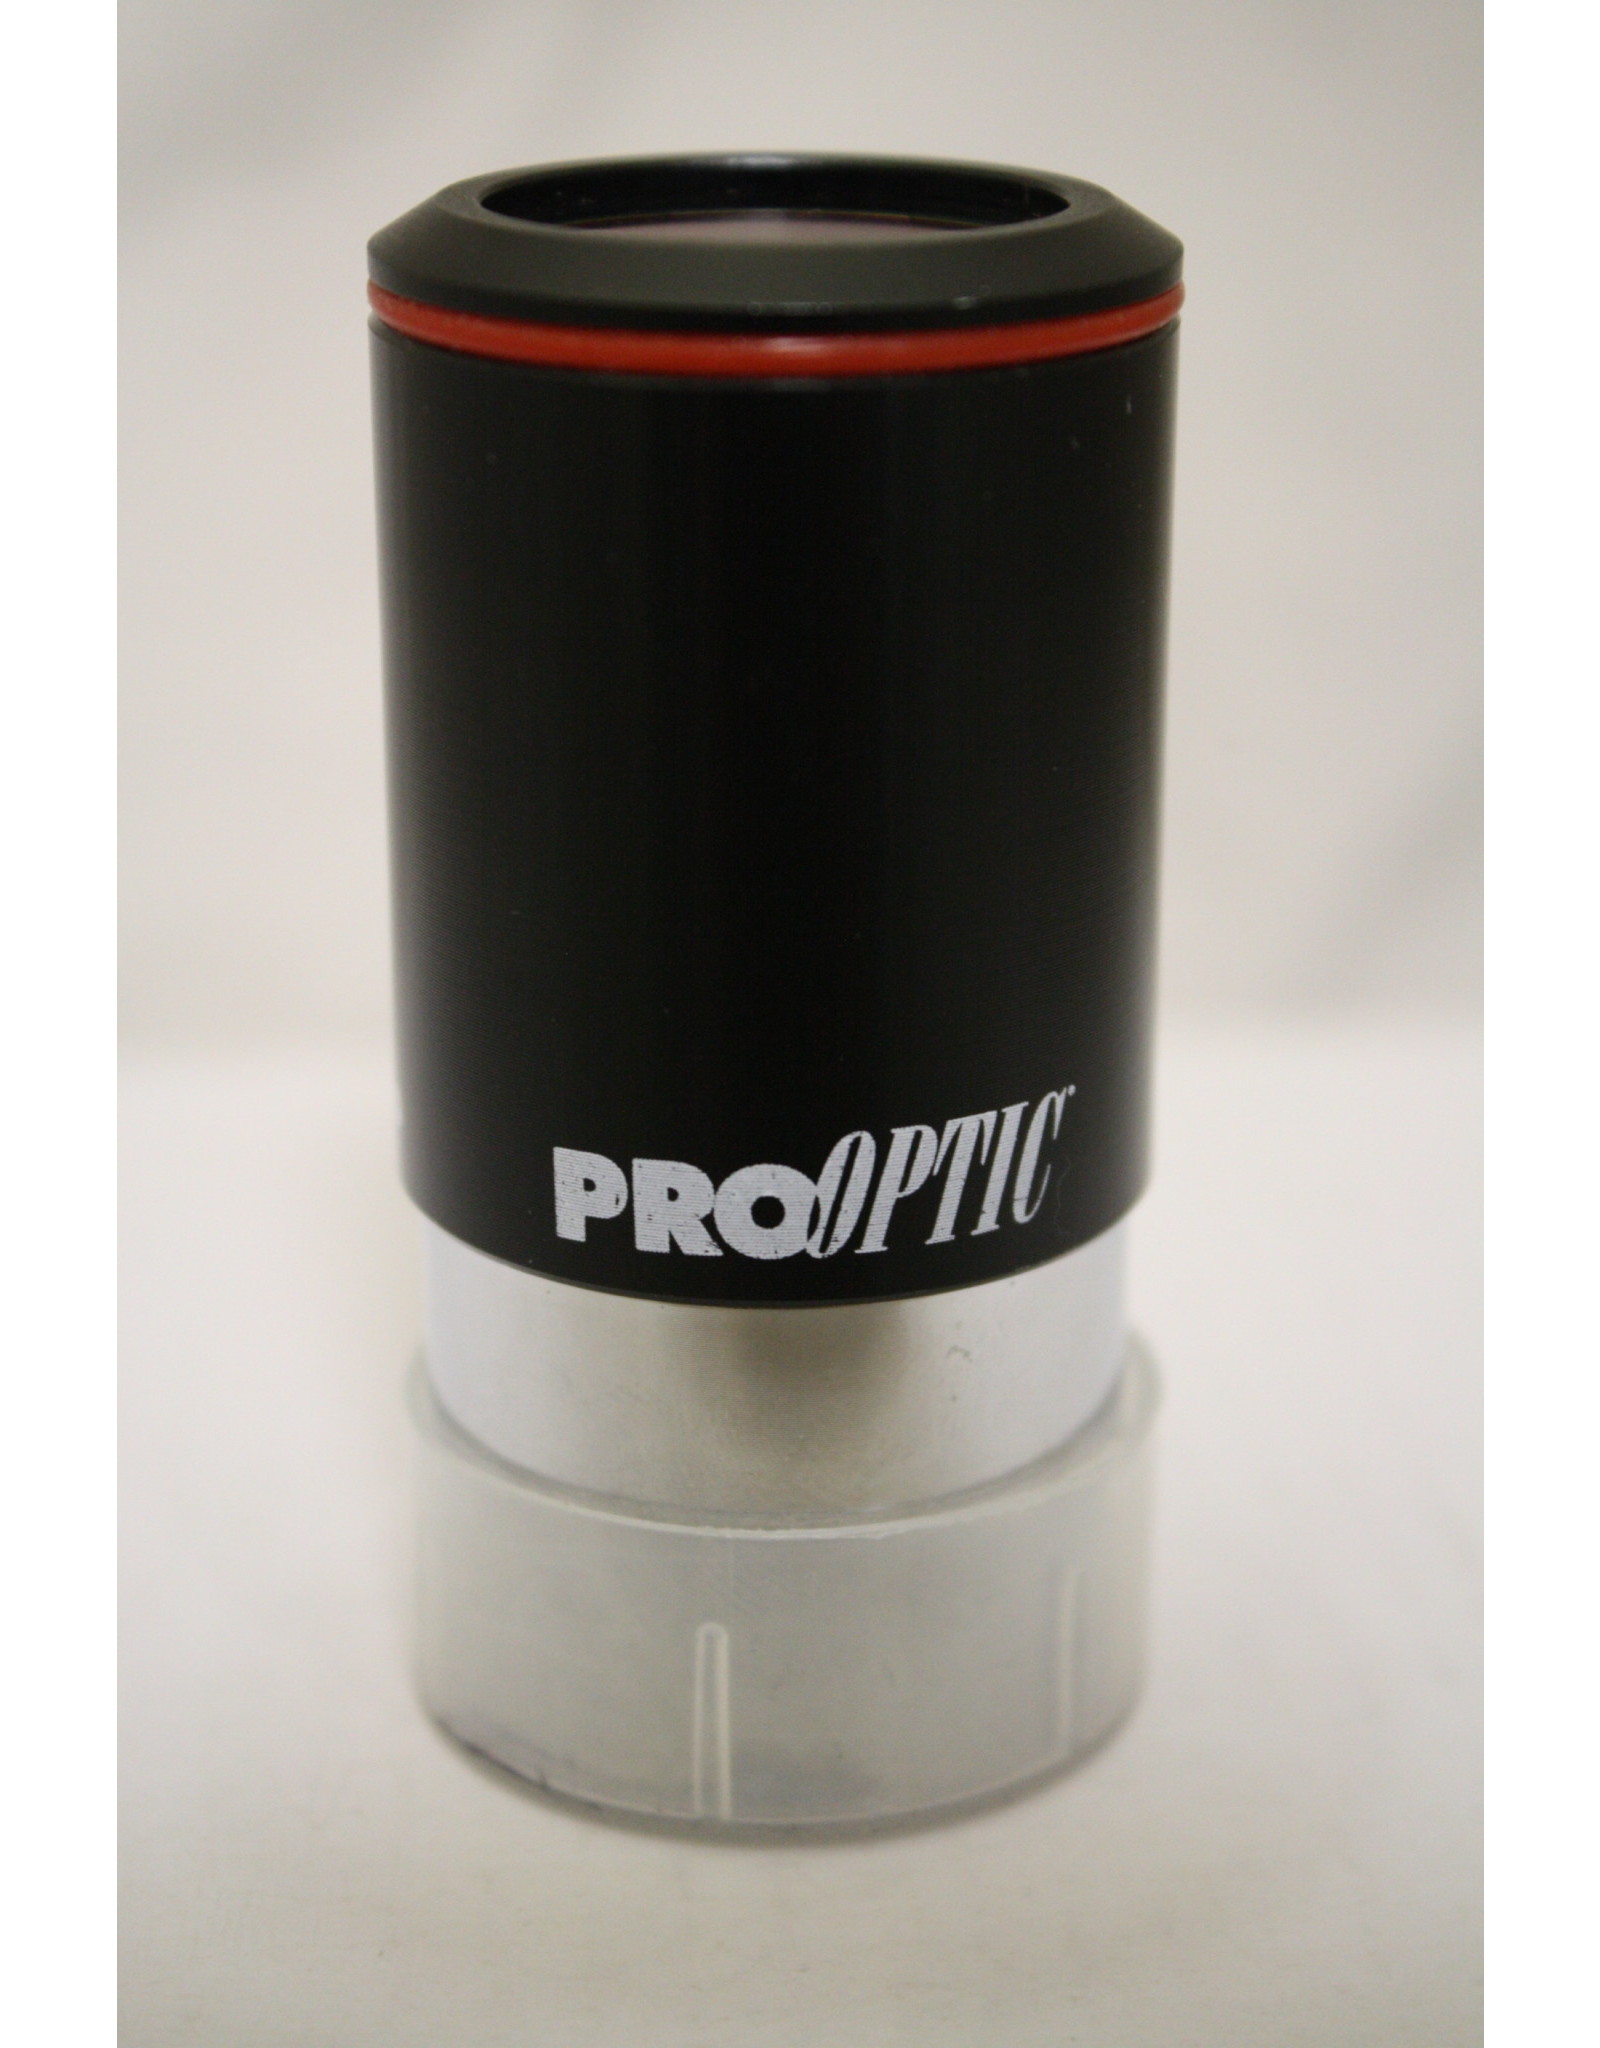 ProOptic 25mm Plossl